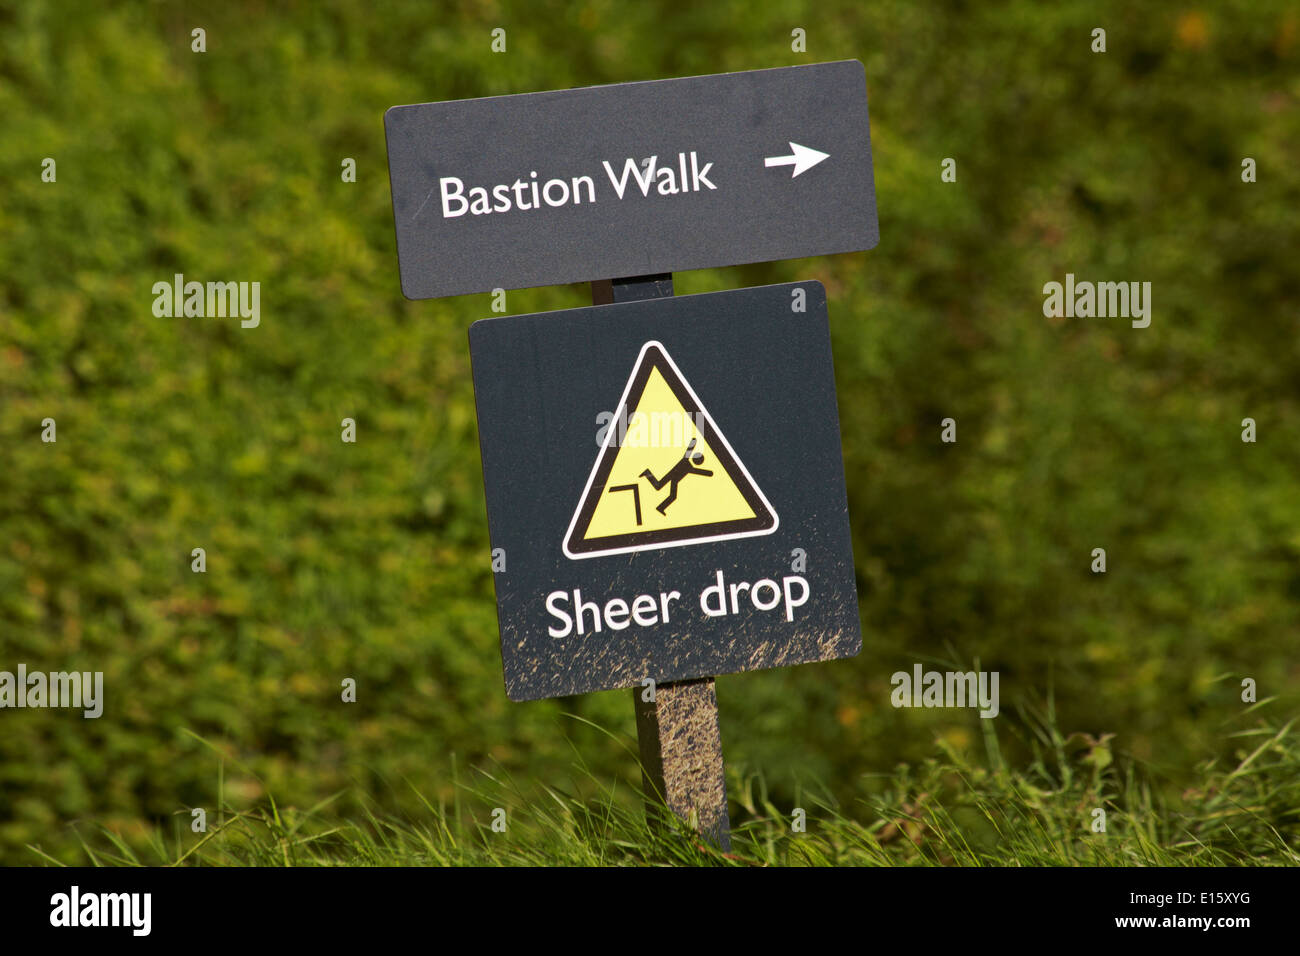 Bastion Walk sheer drop - sign at Carisbrooke Castle, Carisbrooke, Newport, Isle of Wight, Hampshire UK in May Stock Photo